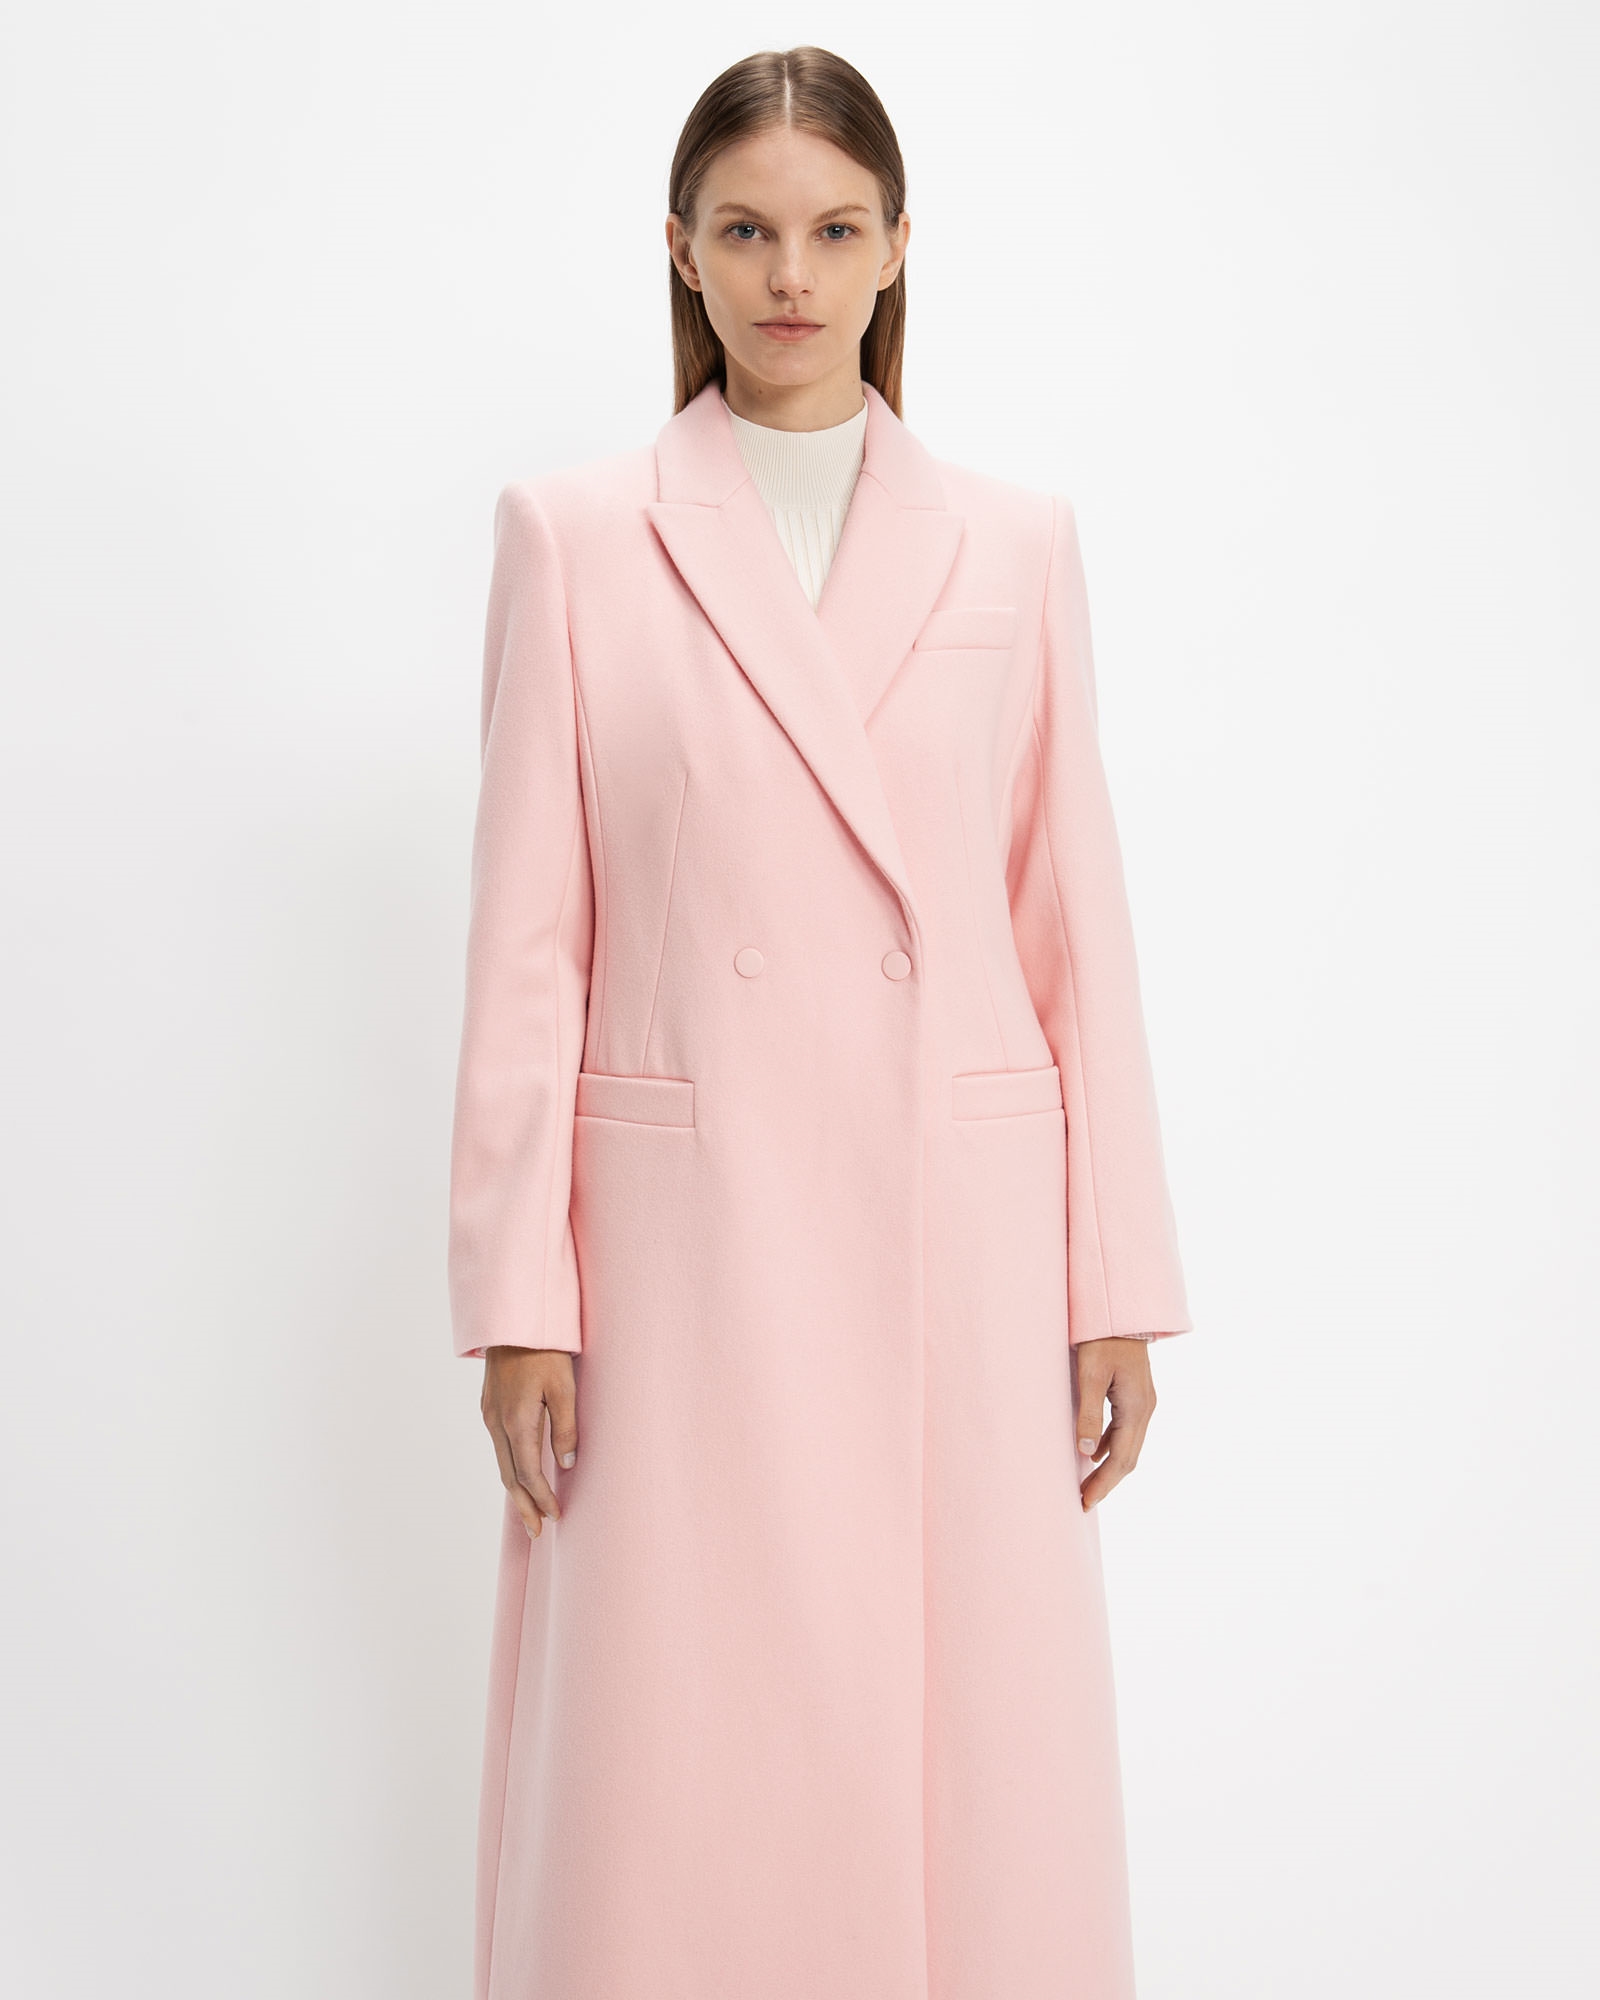 Wool Felt Tailored Coat | Buy Jackets & Coats Online - Cue